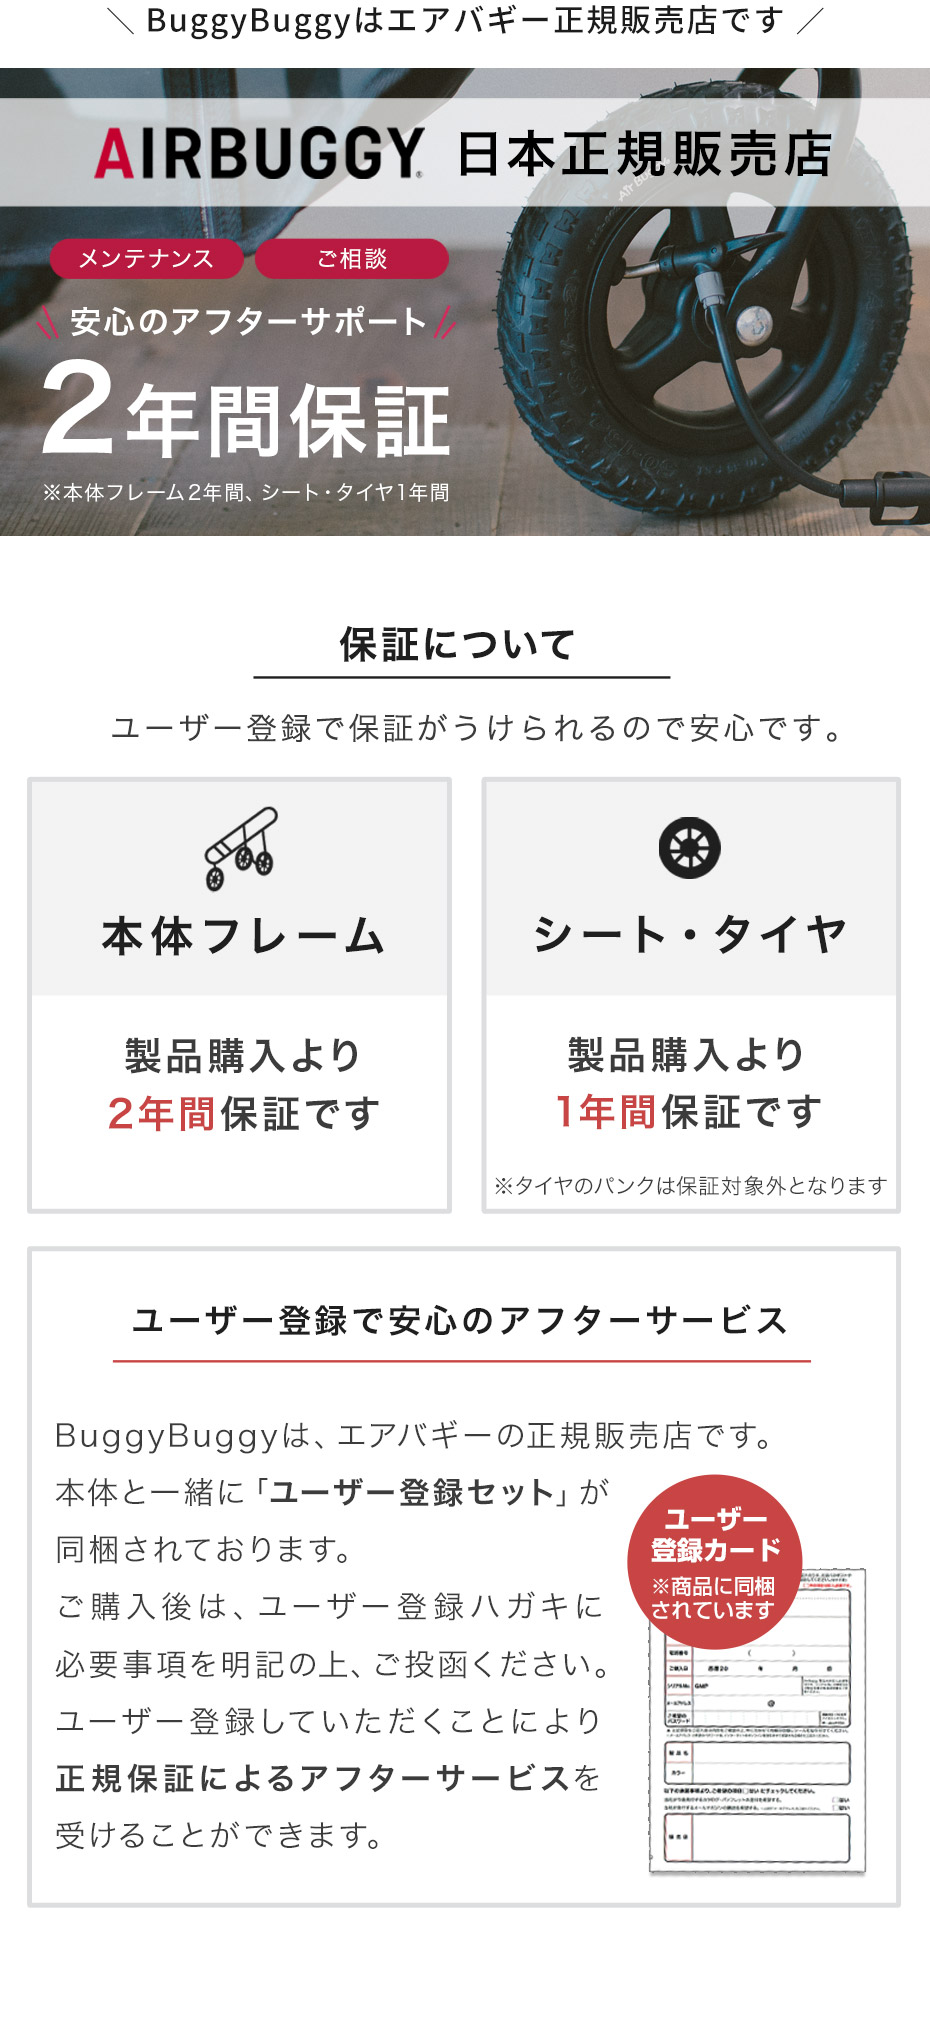 【BuggyBuggy】はエアバギー正規販売店です。